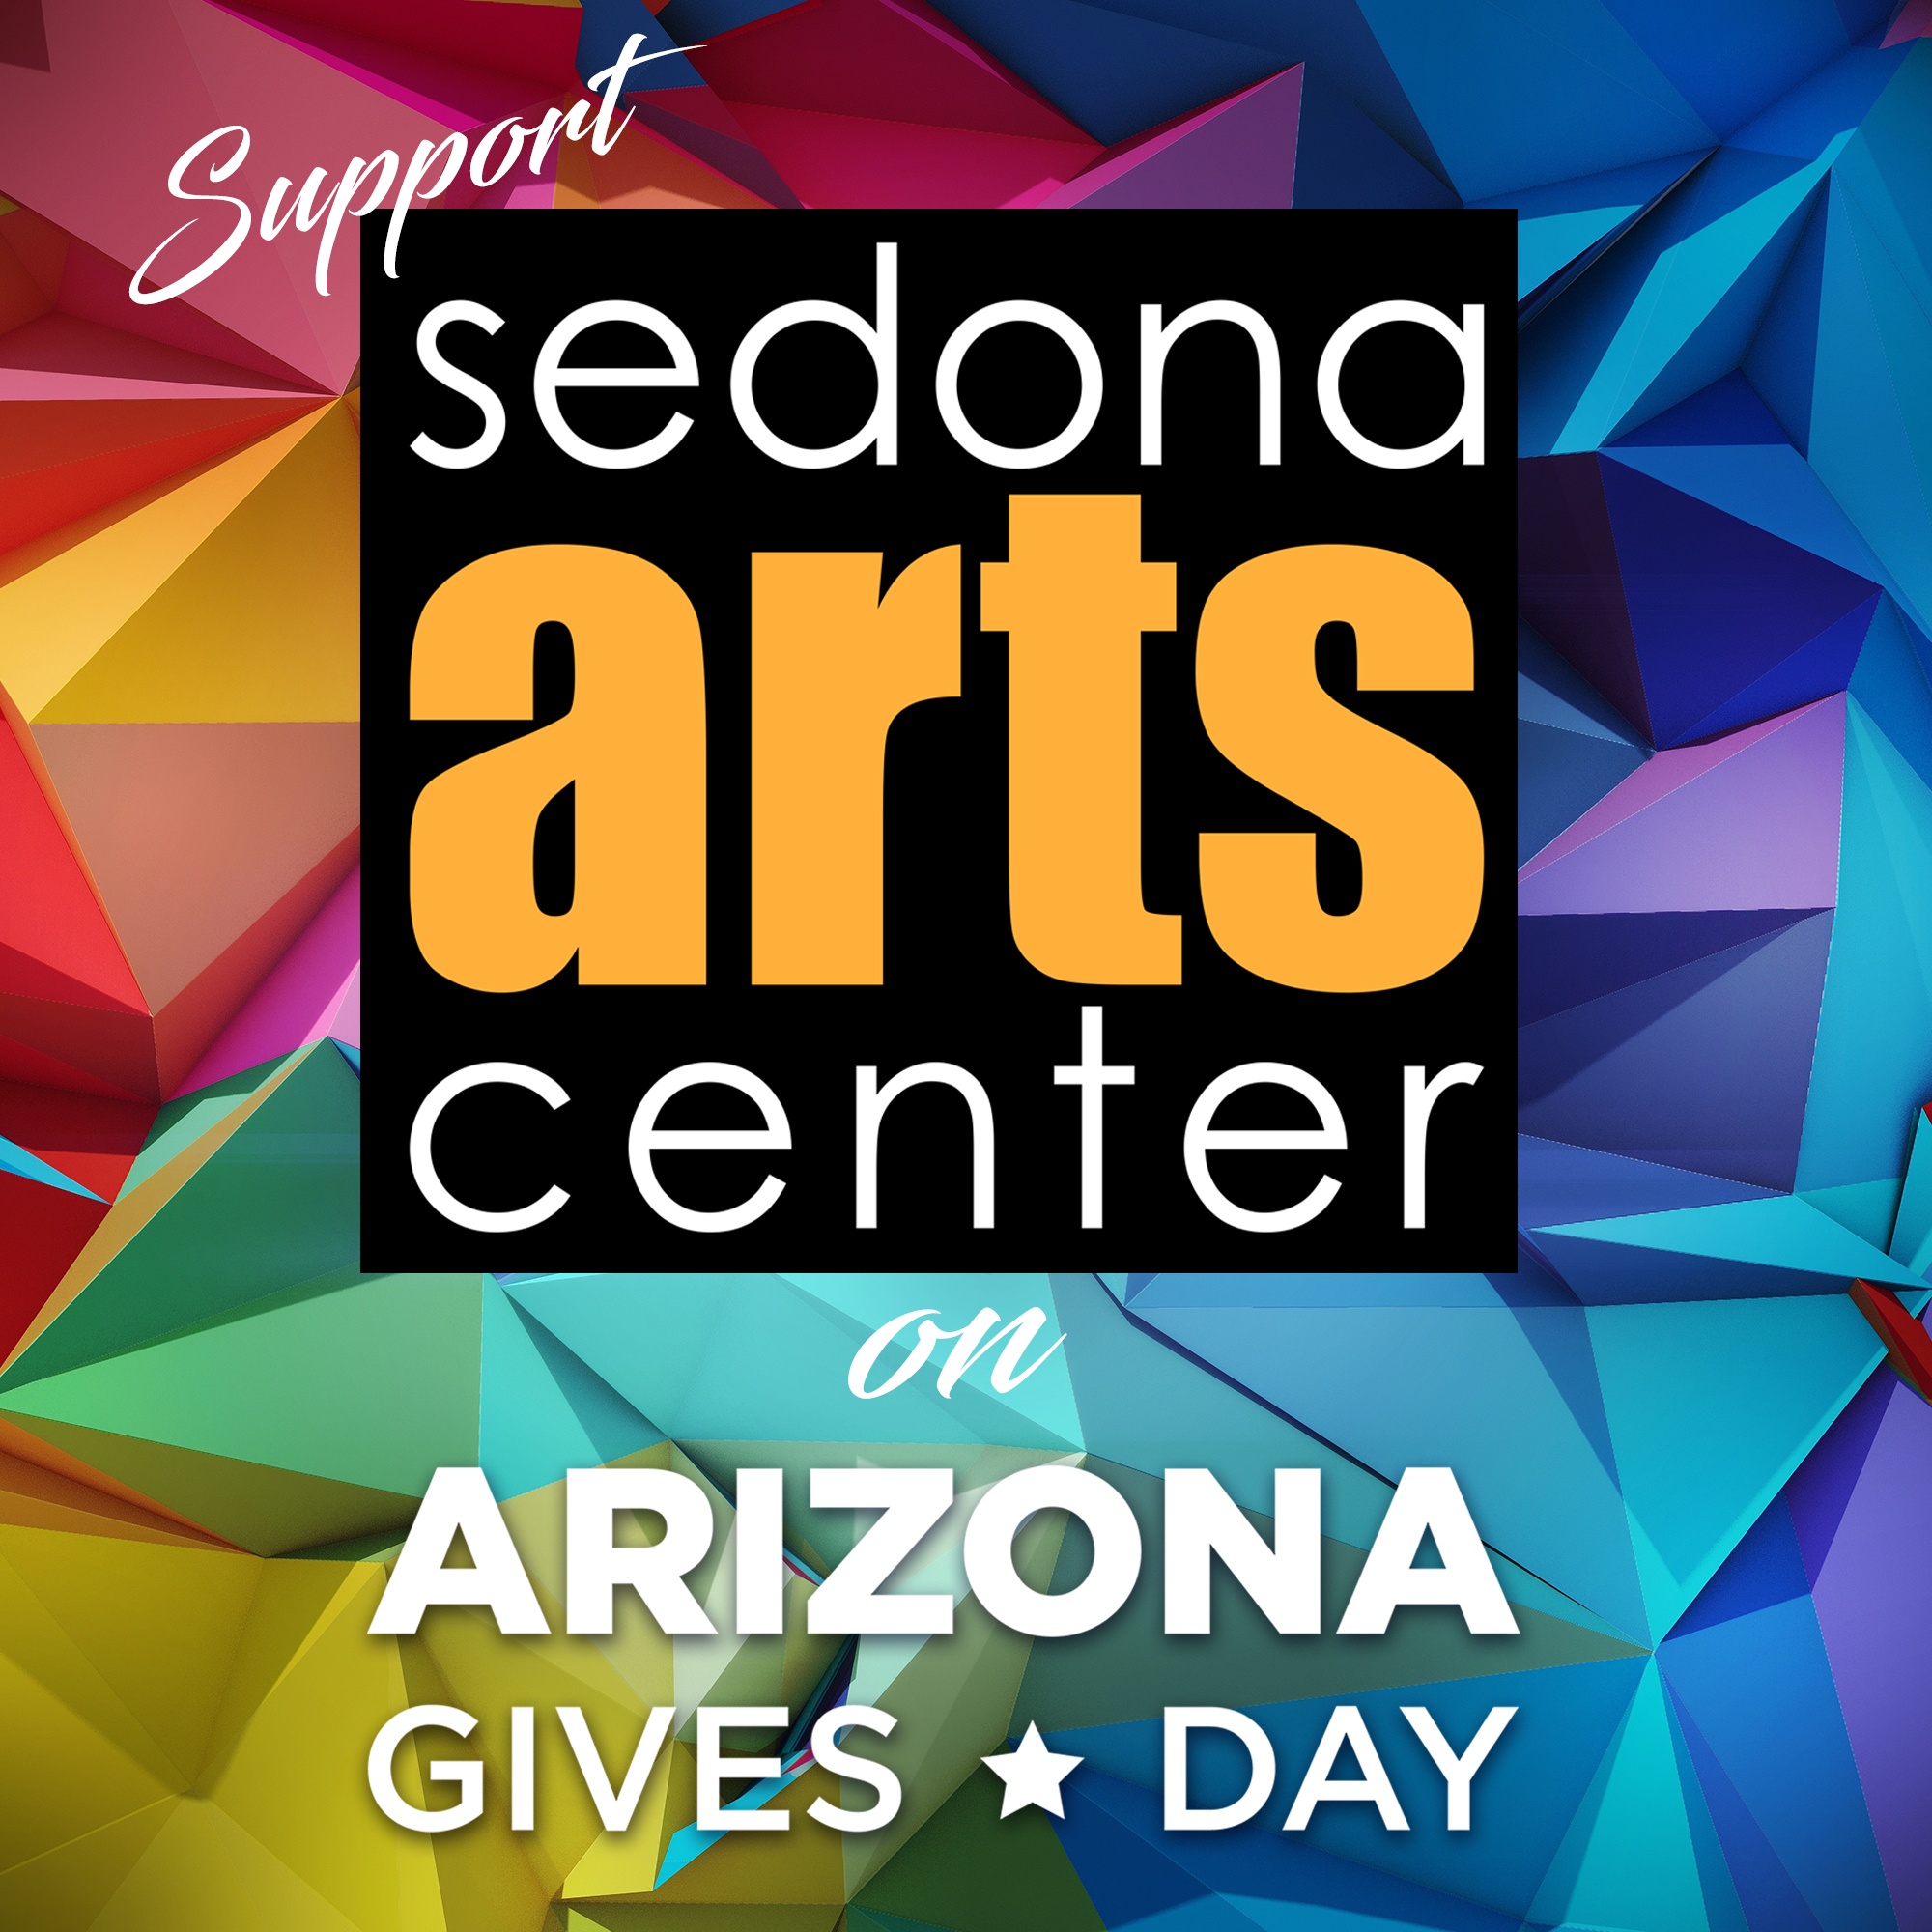 Support Sedona Arts Center on Arizona Gives Day